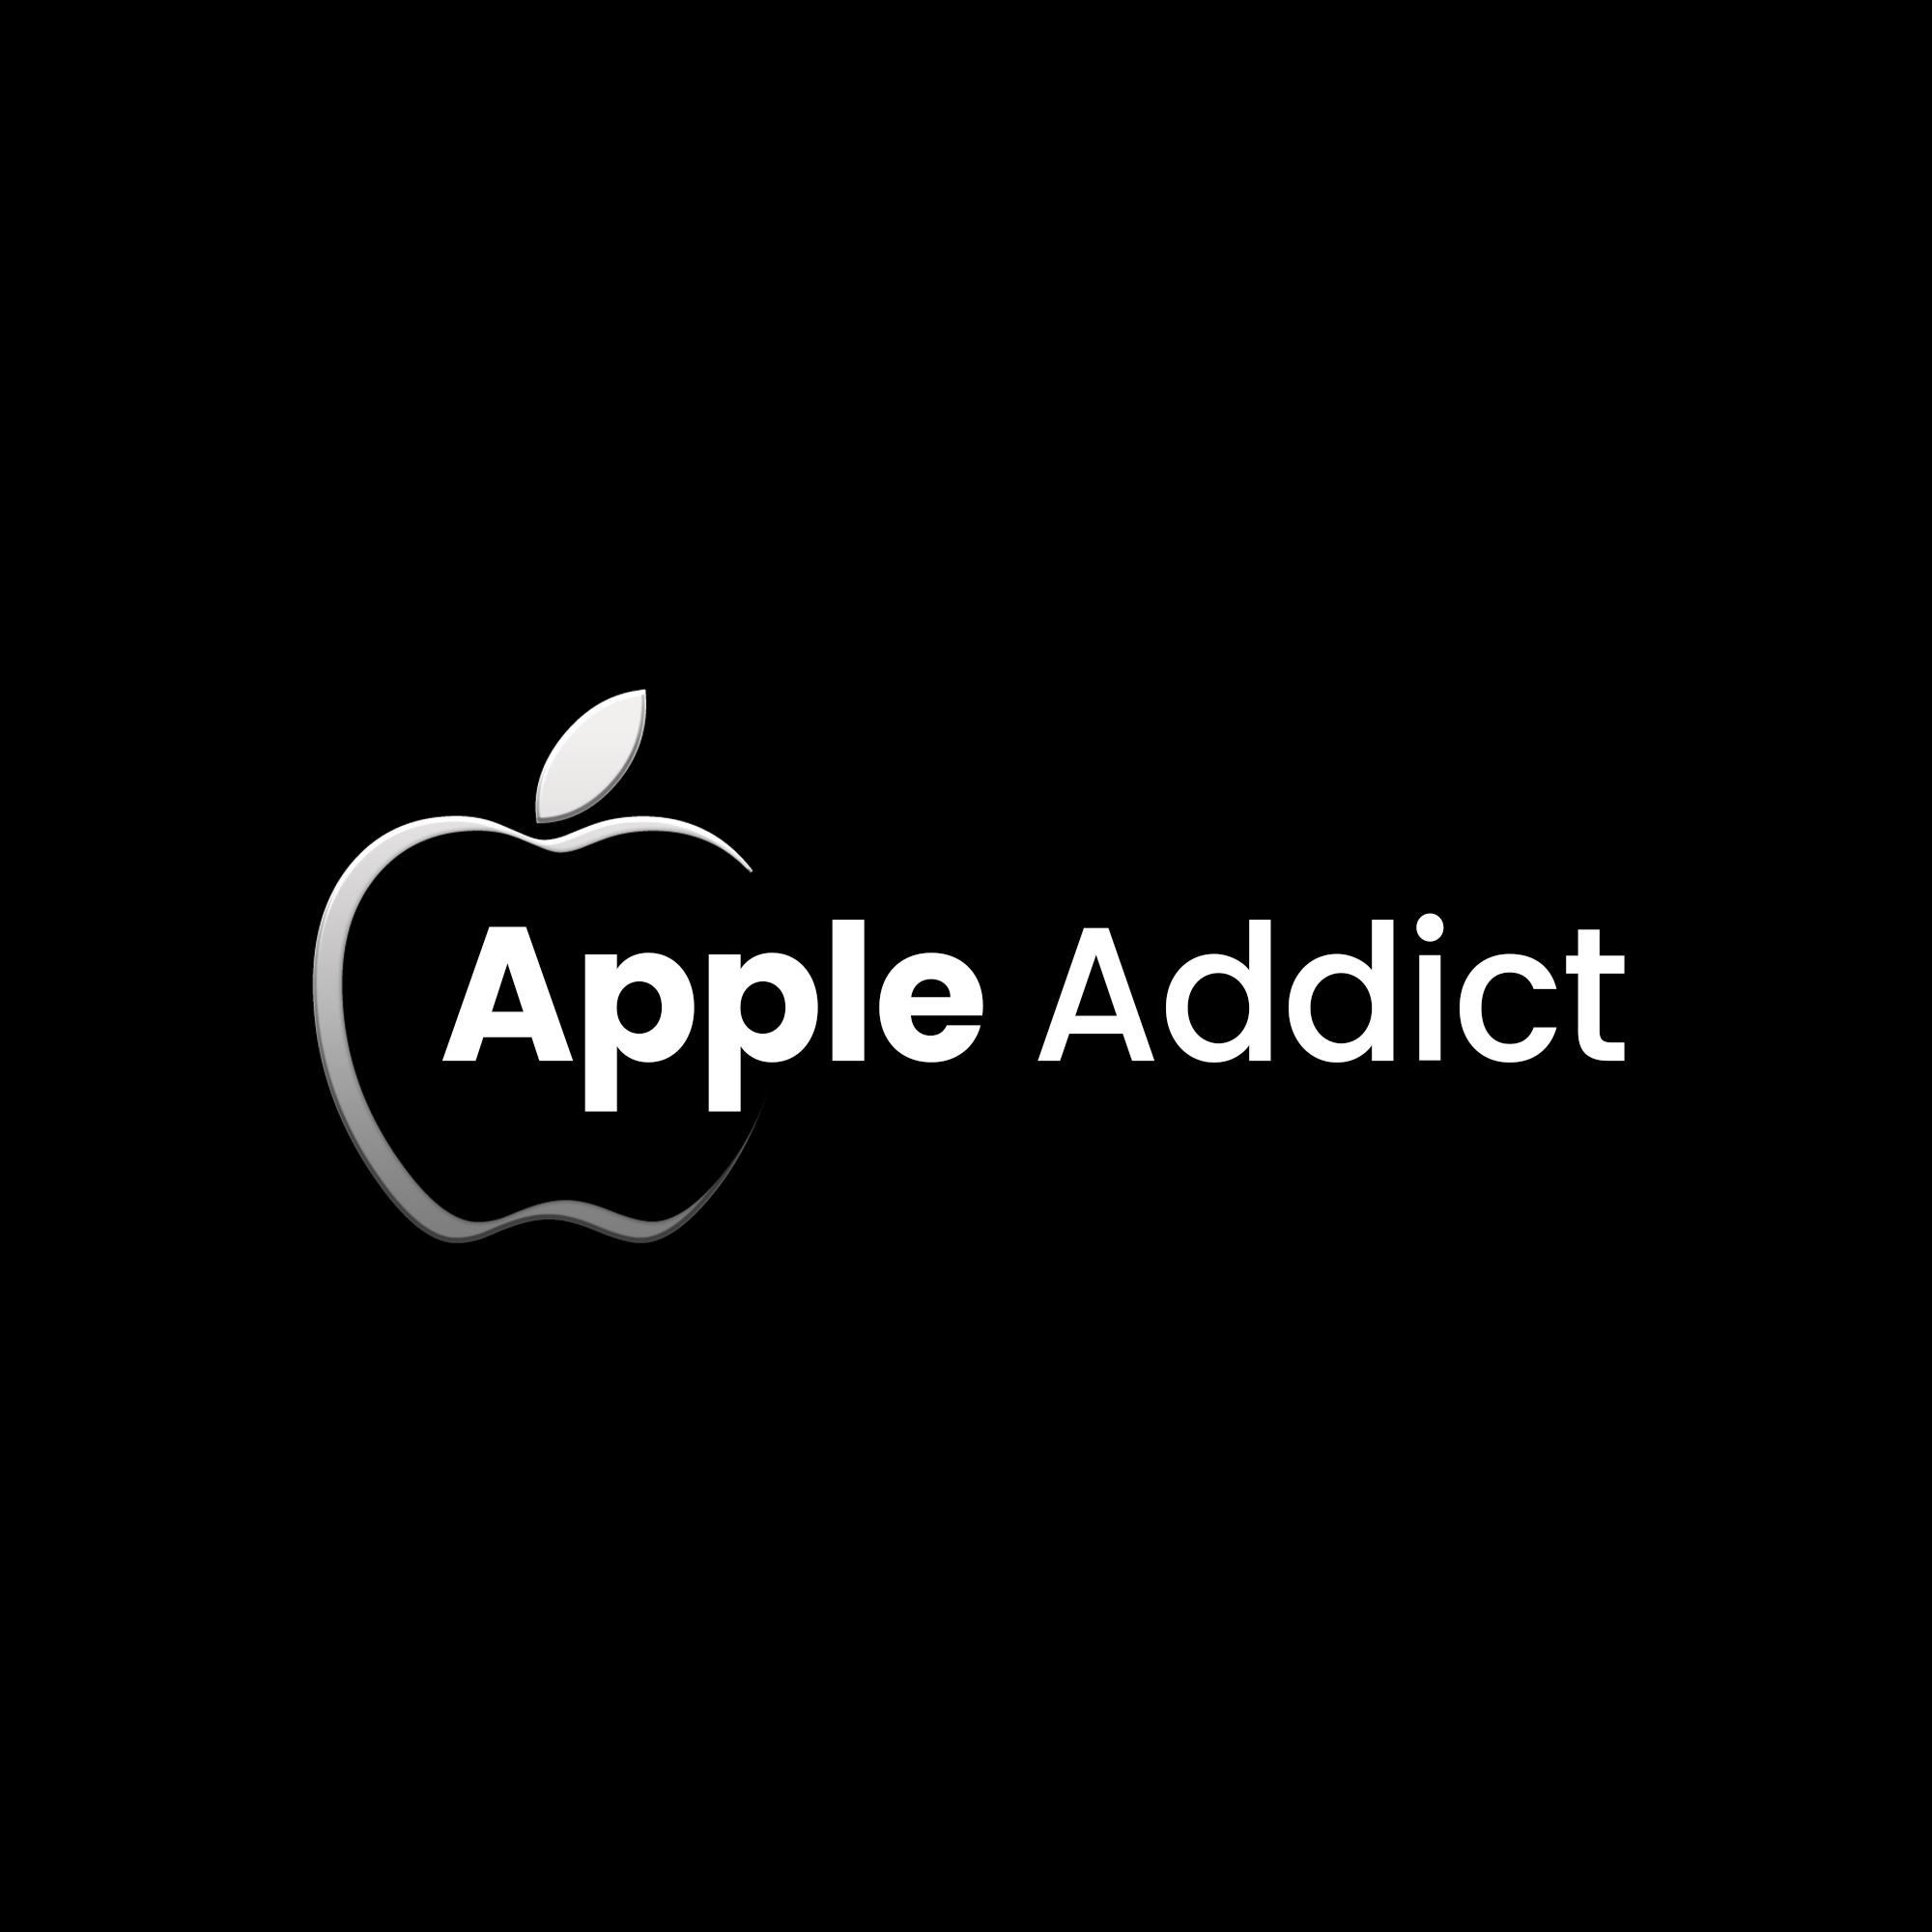 Apple Addict Logo